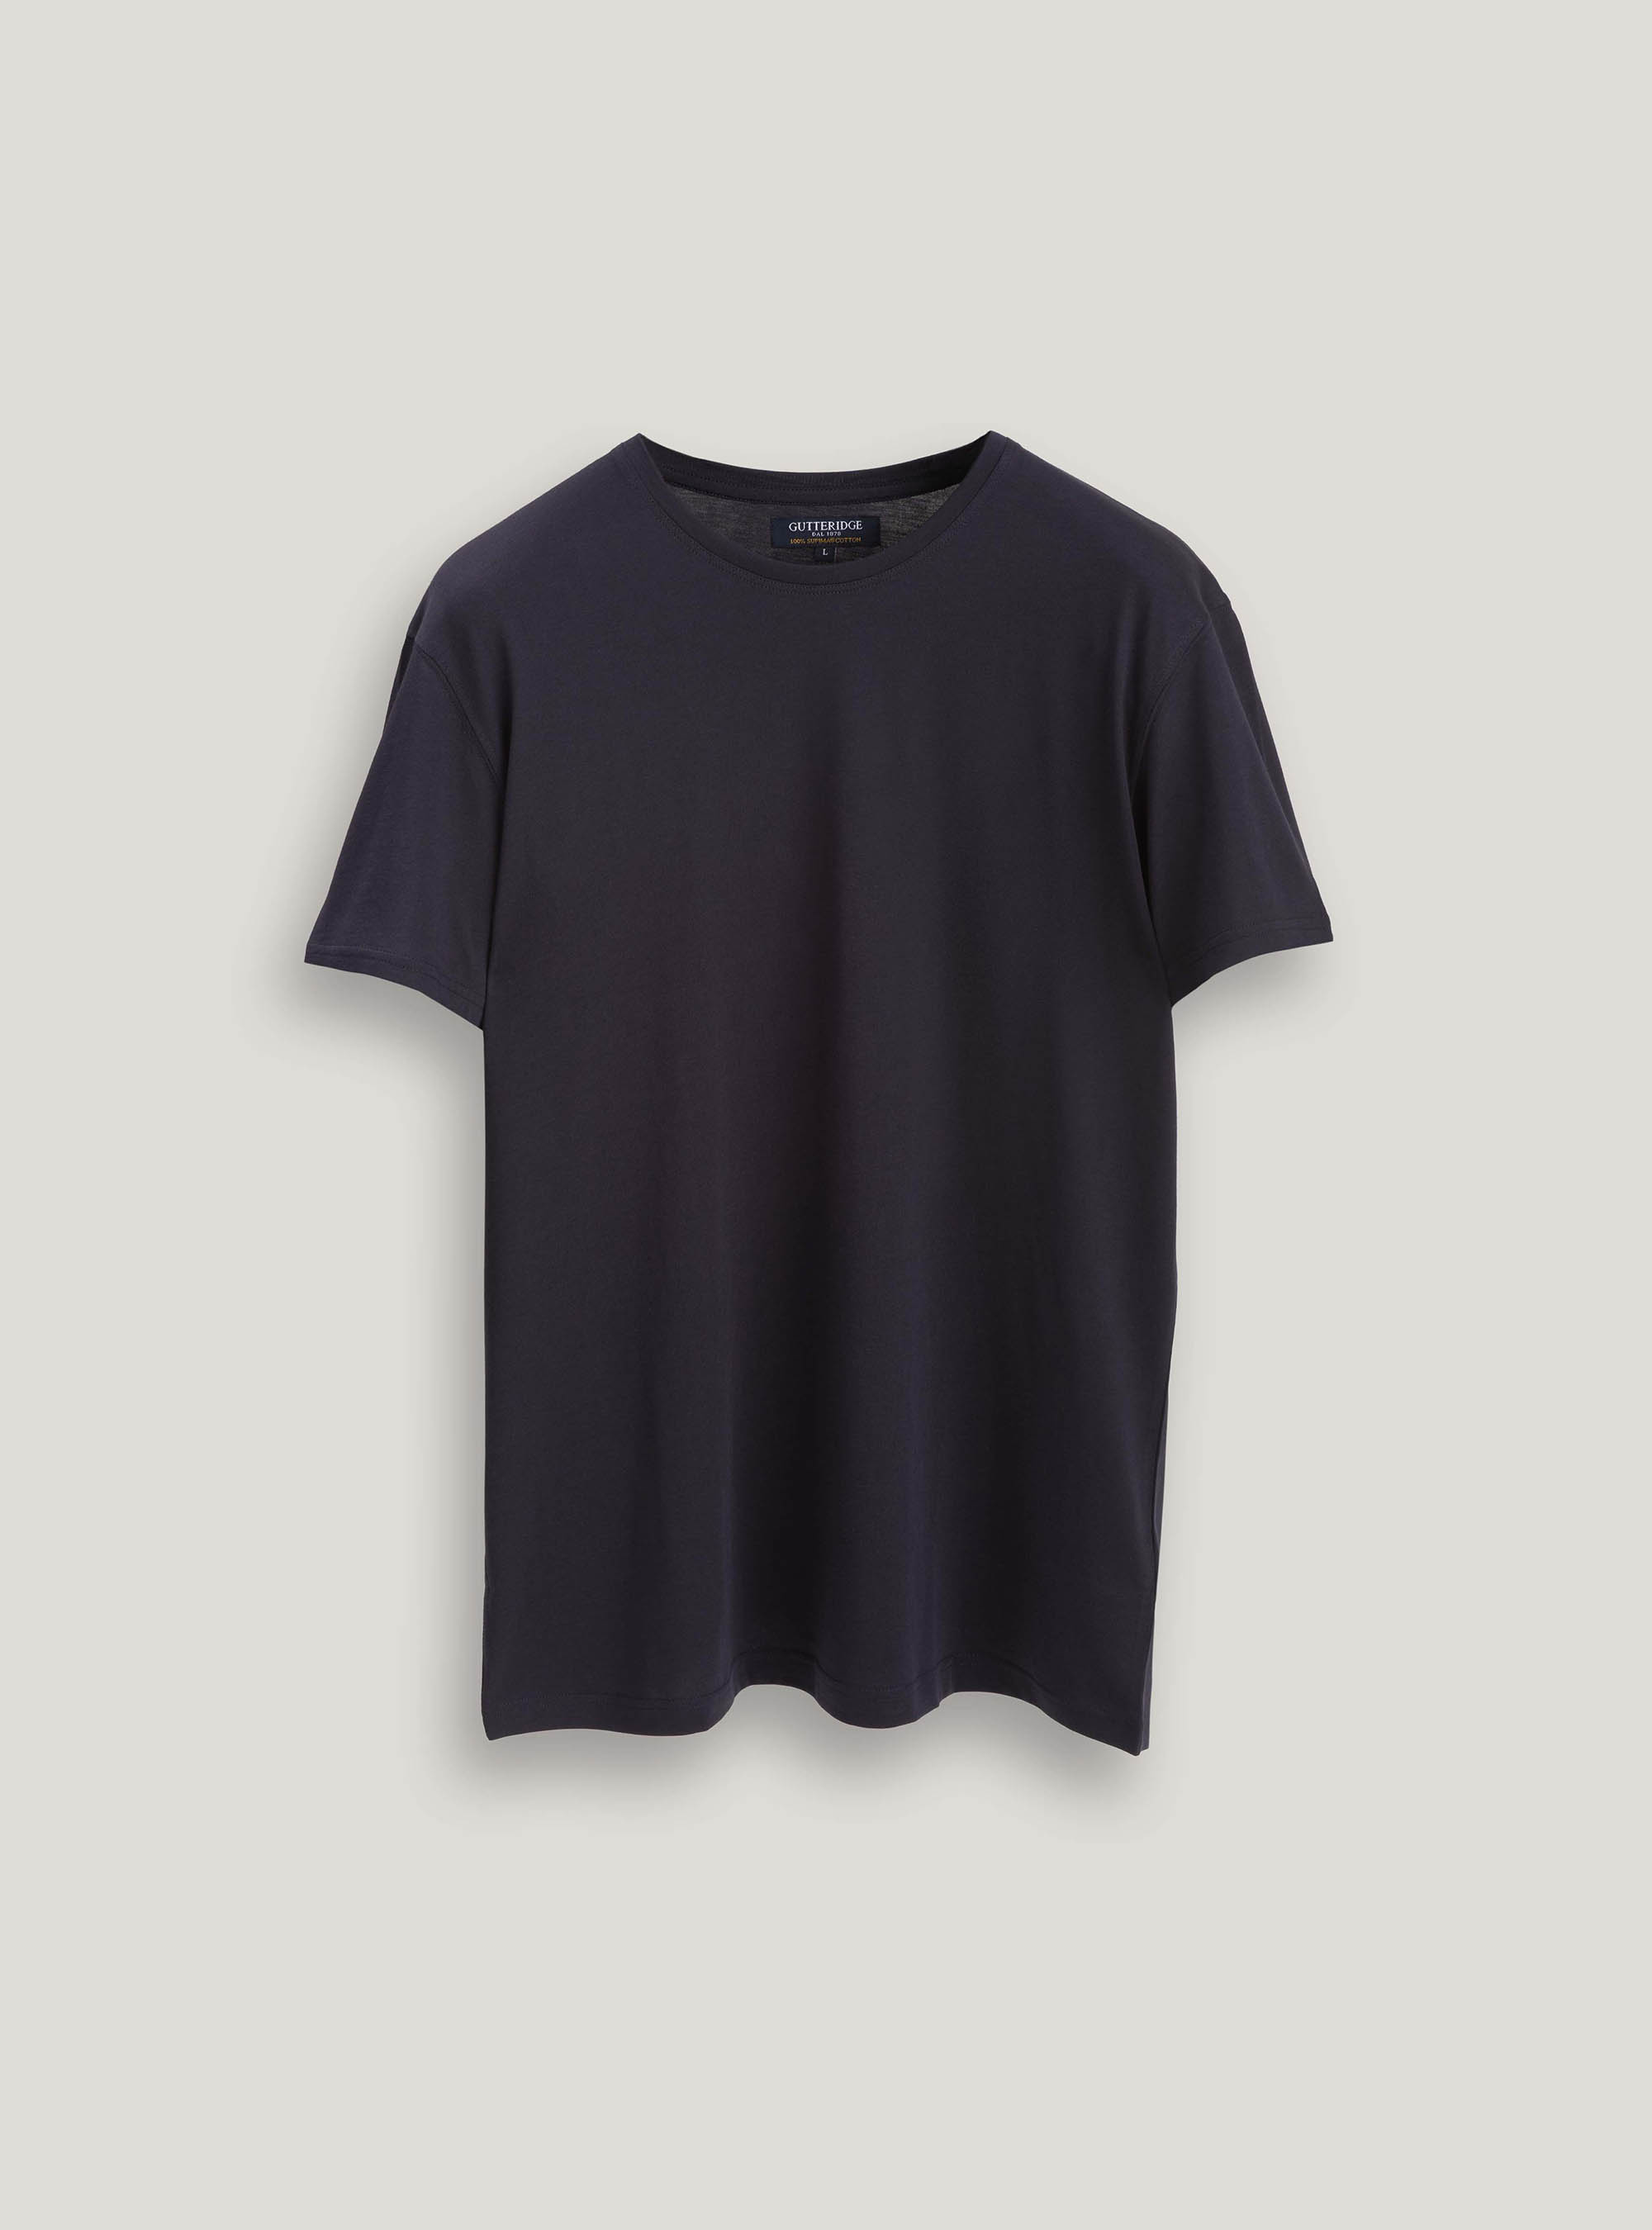 T-shirt Level in jersey di cotone Mytheresa Uomo Abbigliamento Top e t-shirt T-shirt T-shirt a maniche corte 